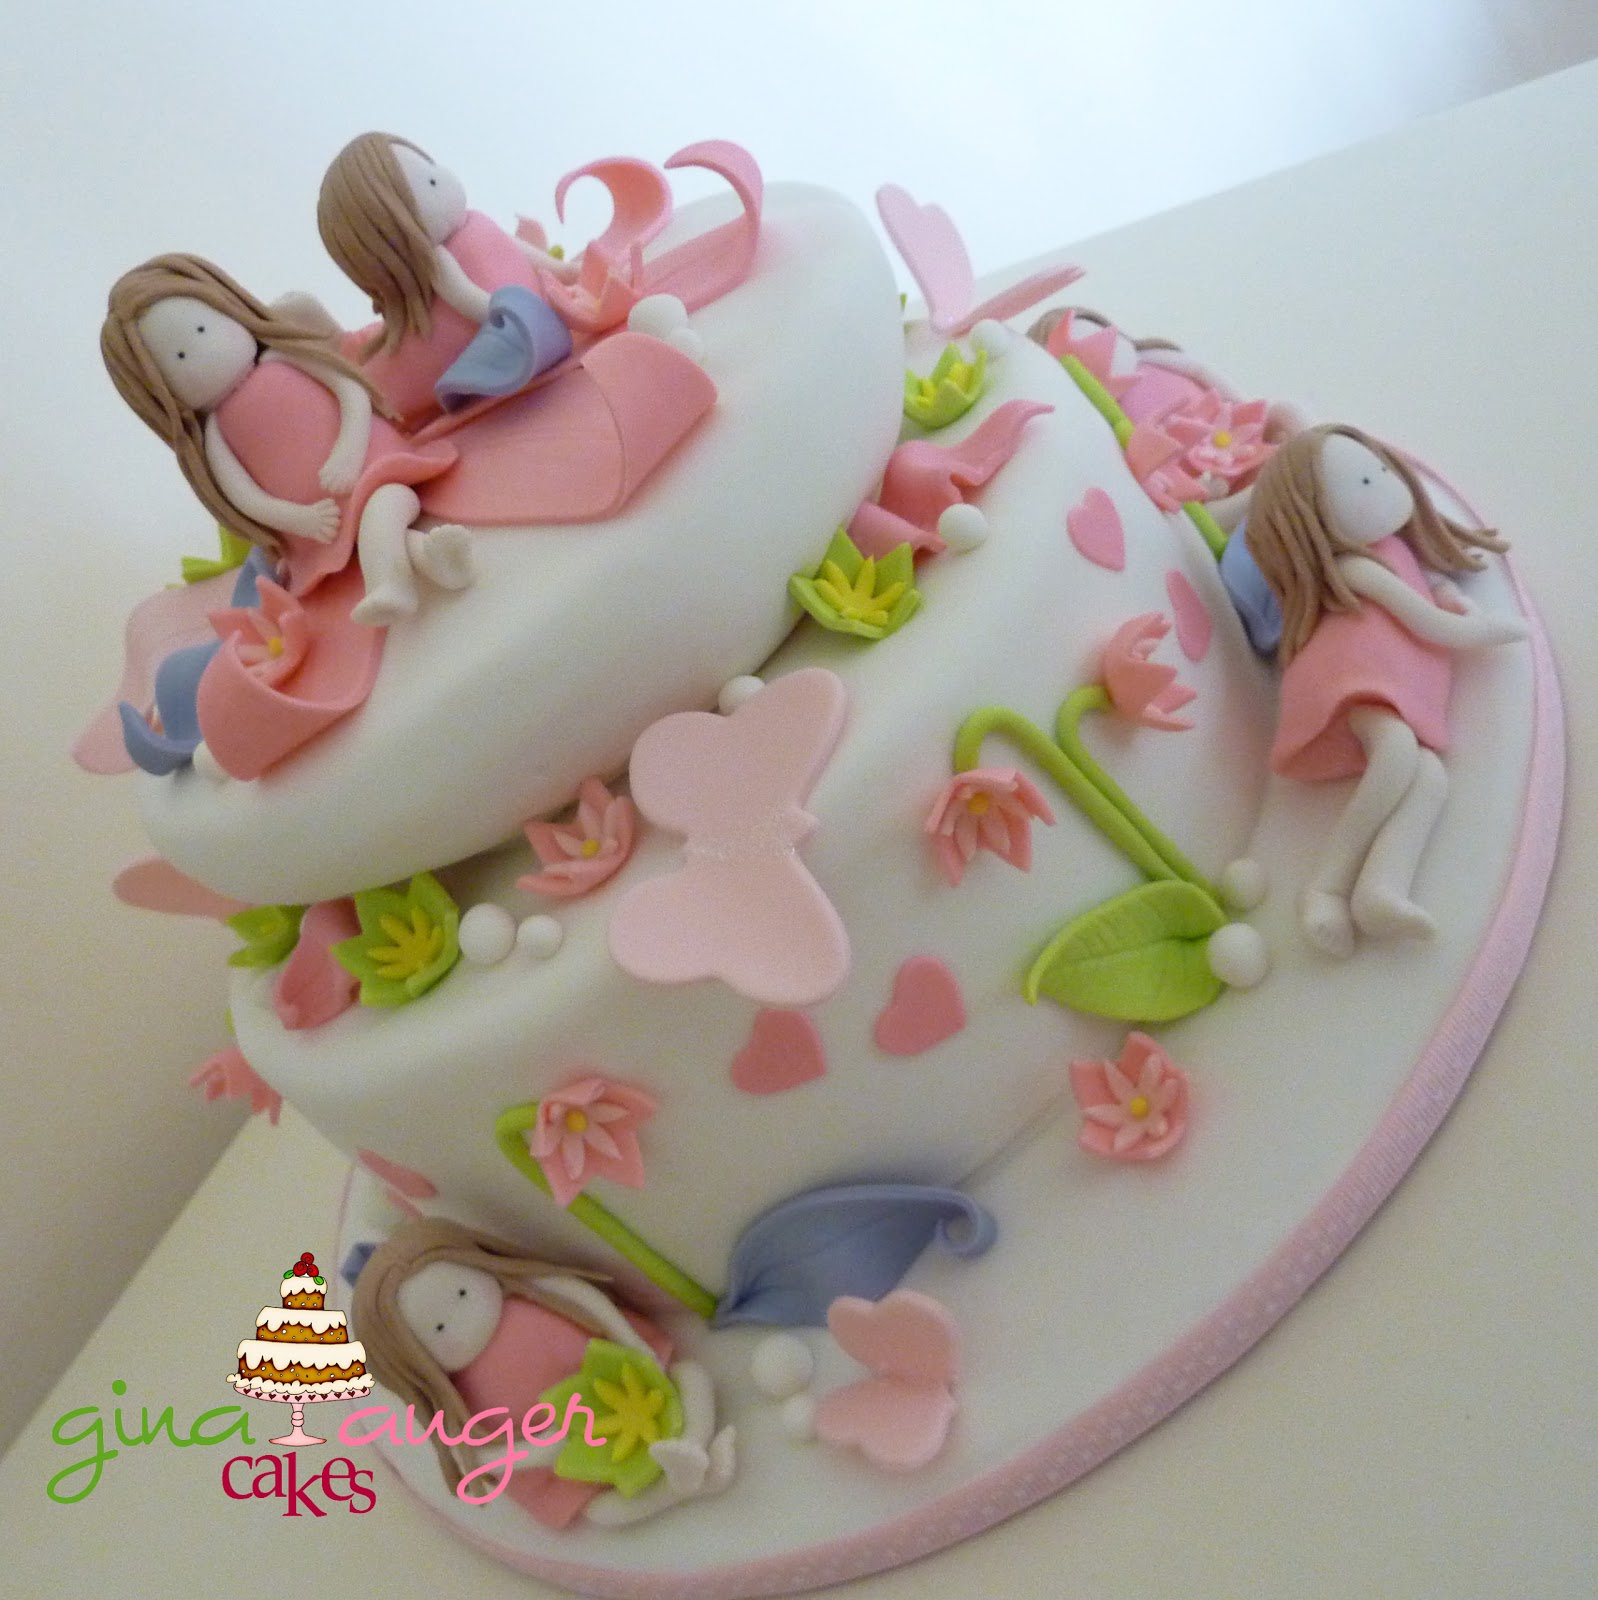 cool cake ideas Sweet Little Girls' Birthday Cake